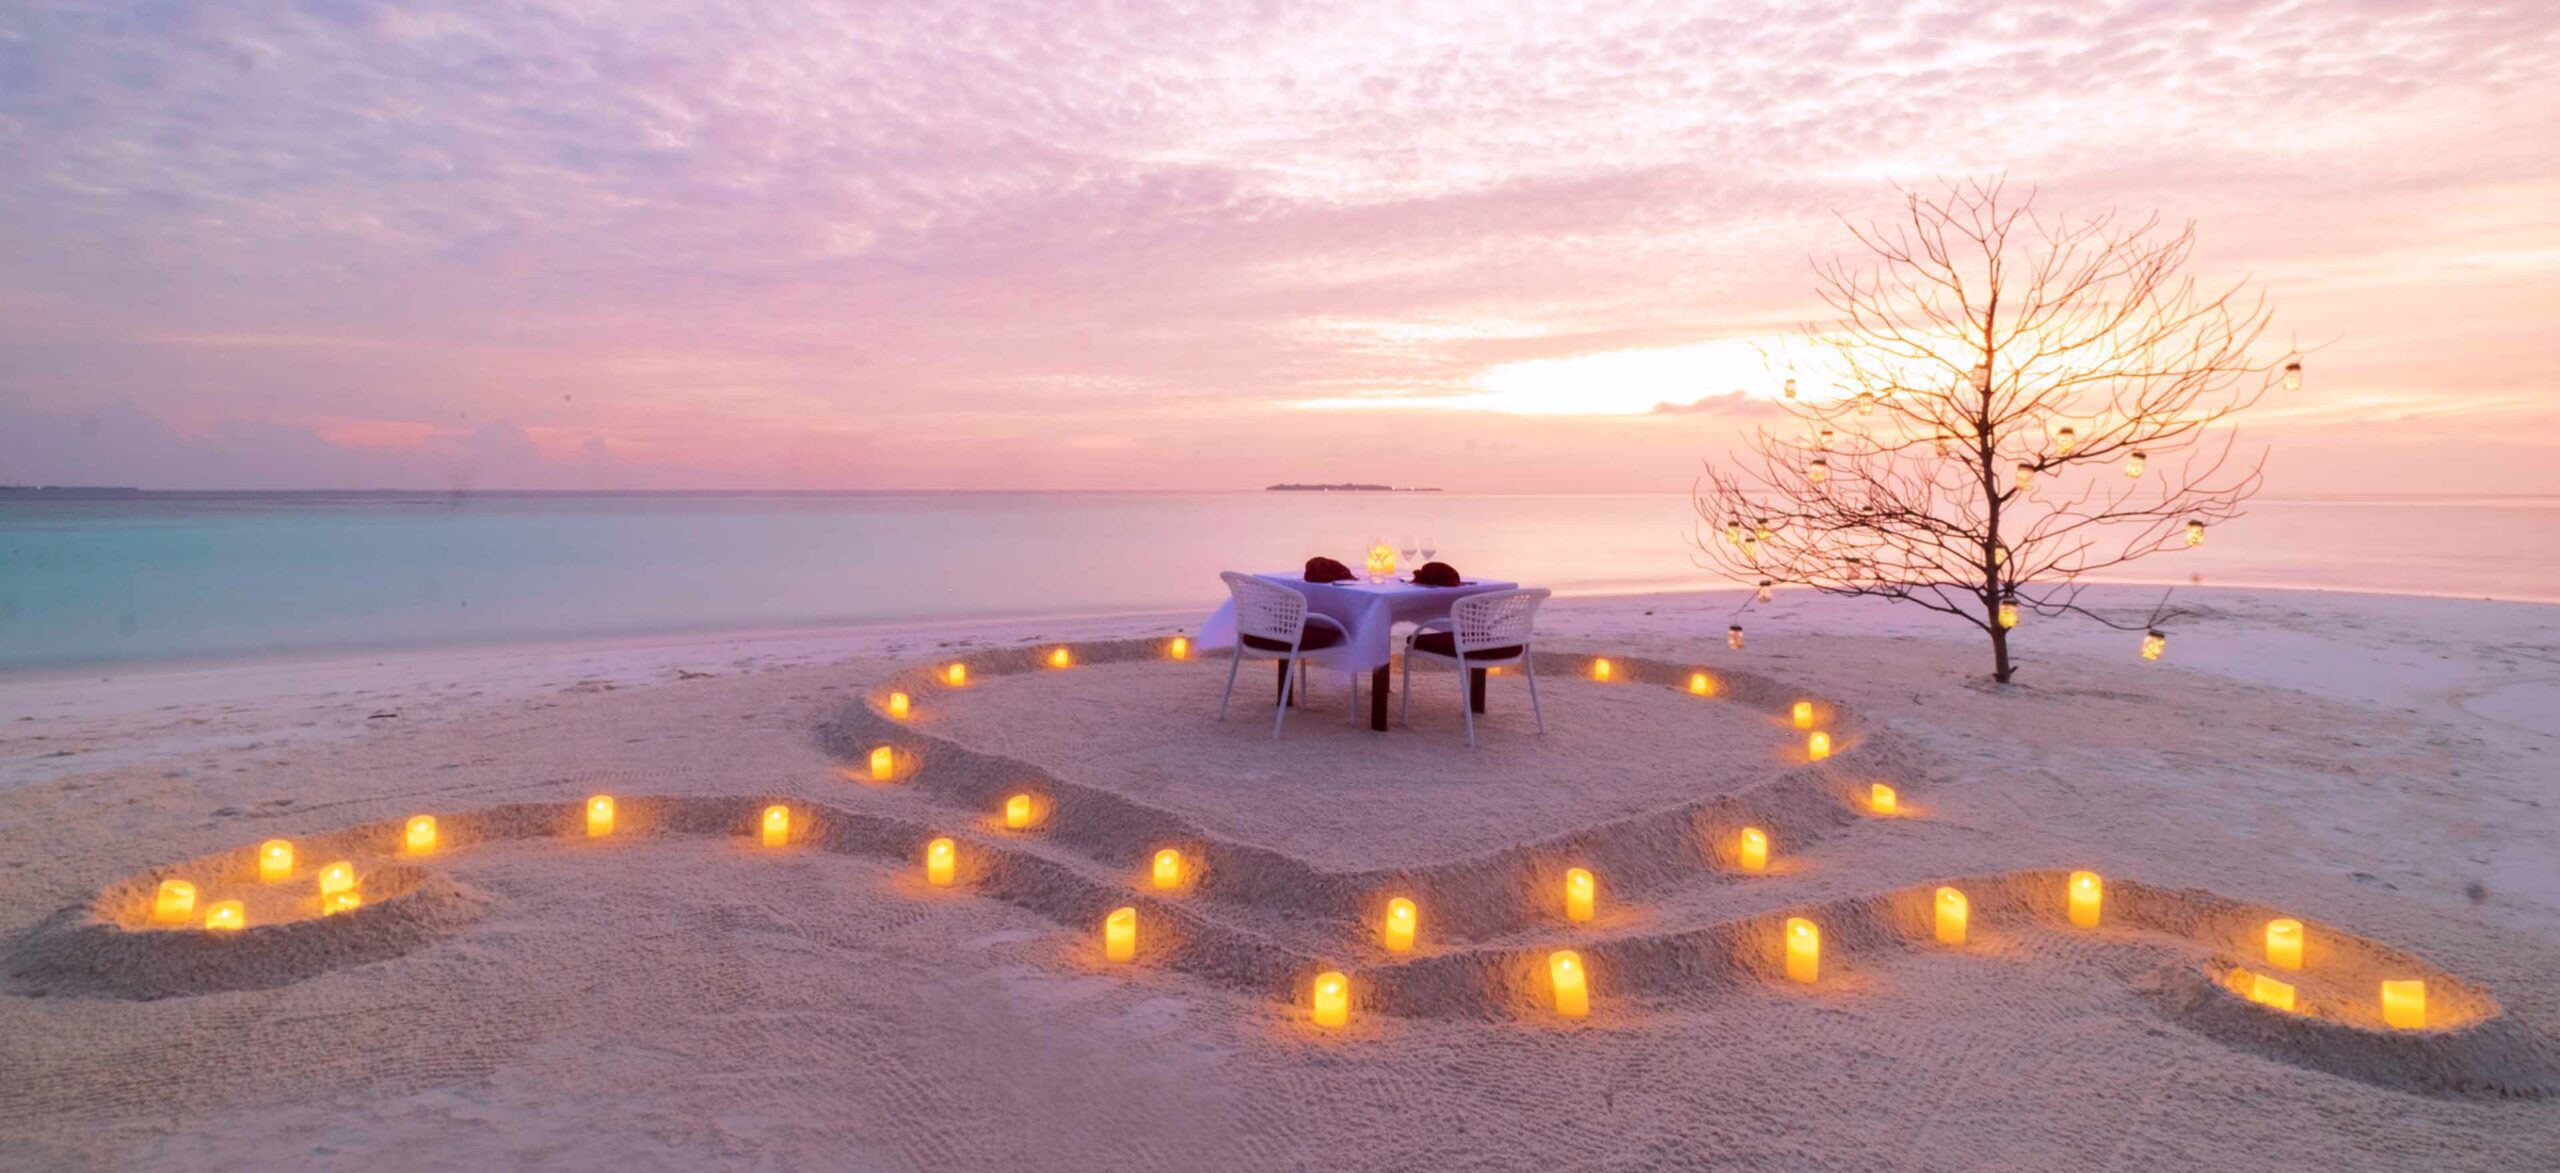 A Romantic Sandbank Picnic as part of Amilla's Romantic Celebrations in the Maldives